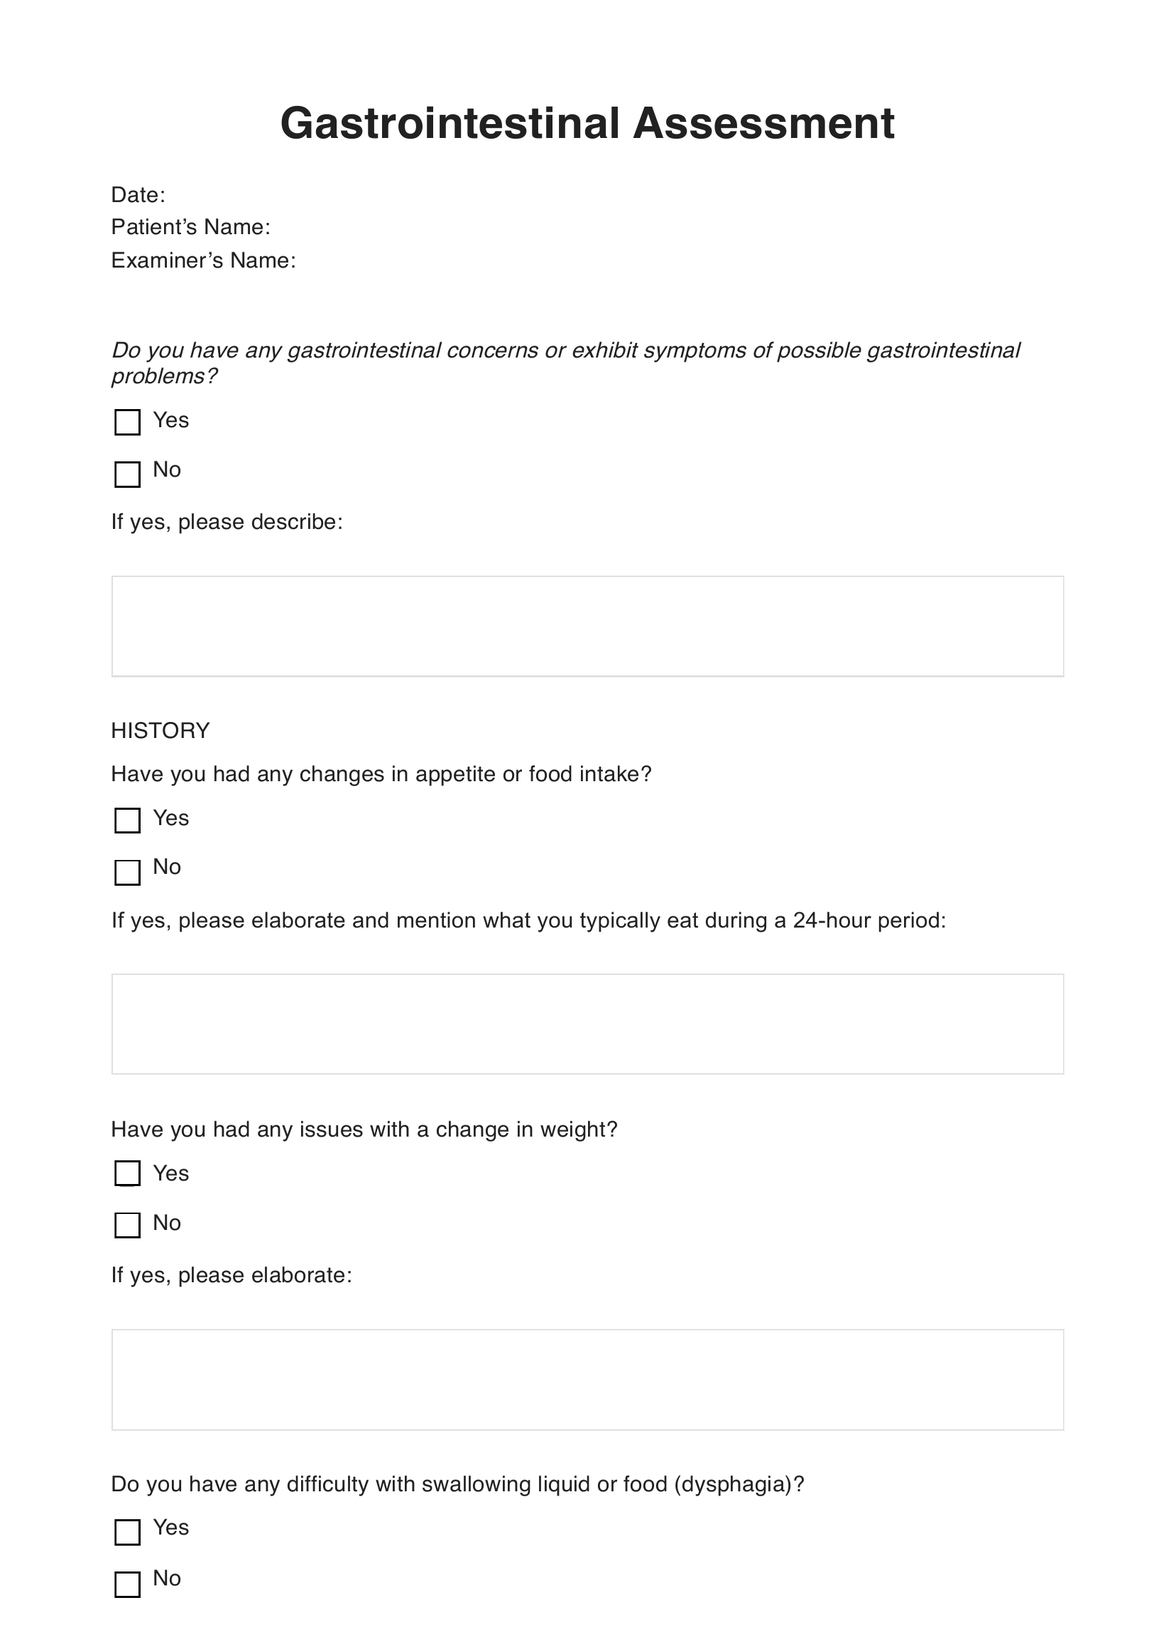 Gastrointestinal Assessment PDF Example